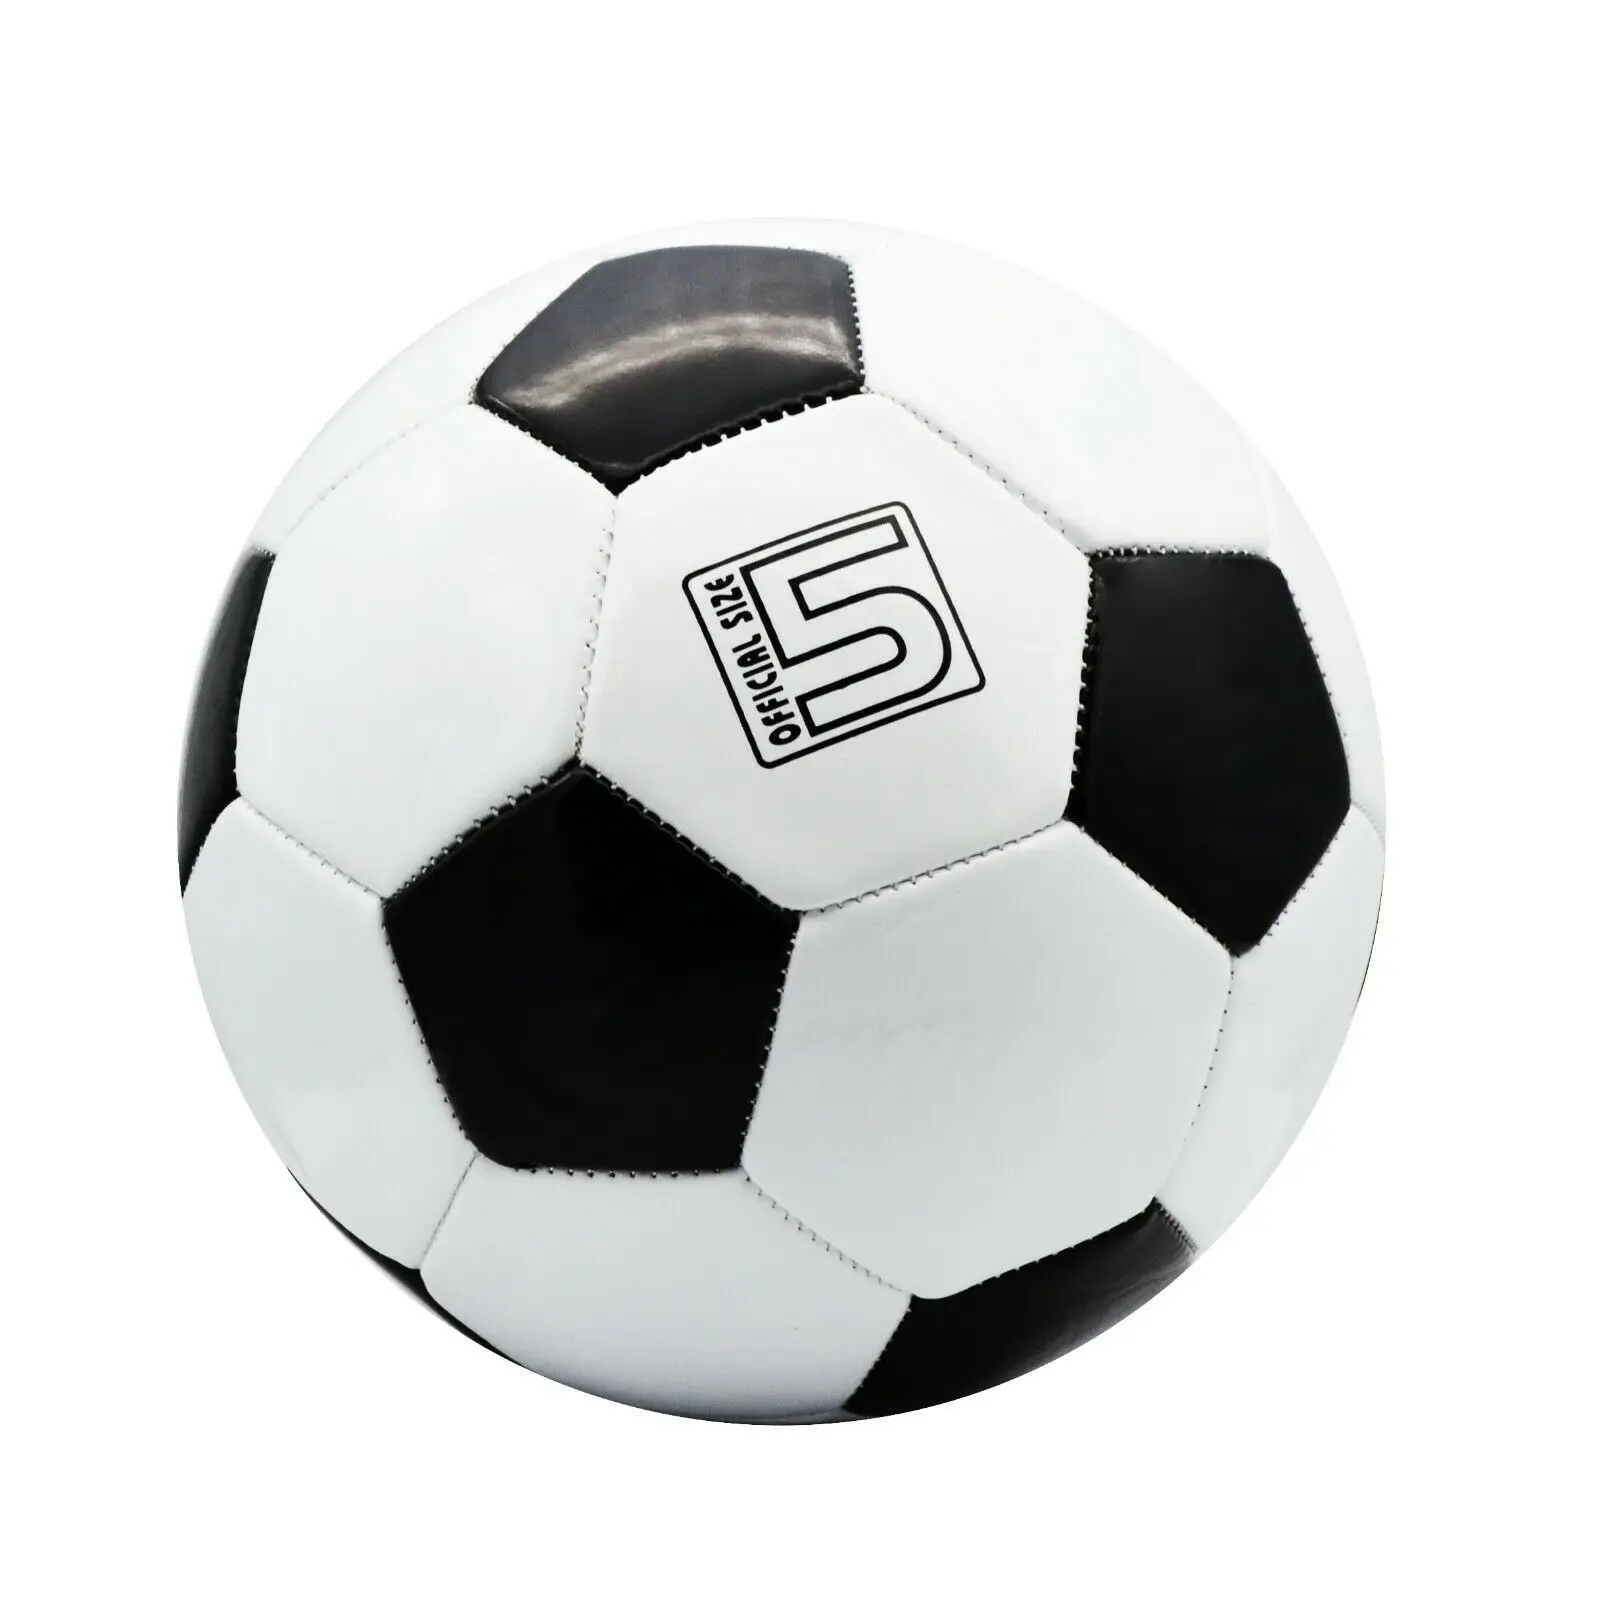 

Soccer Balls Official Size 5 Bulk Assorted Colors Wholesale black white red blue